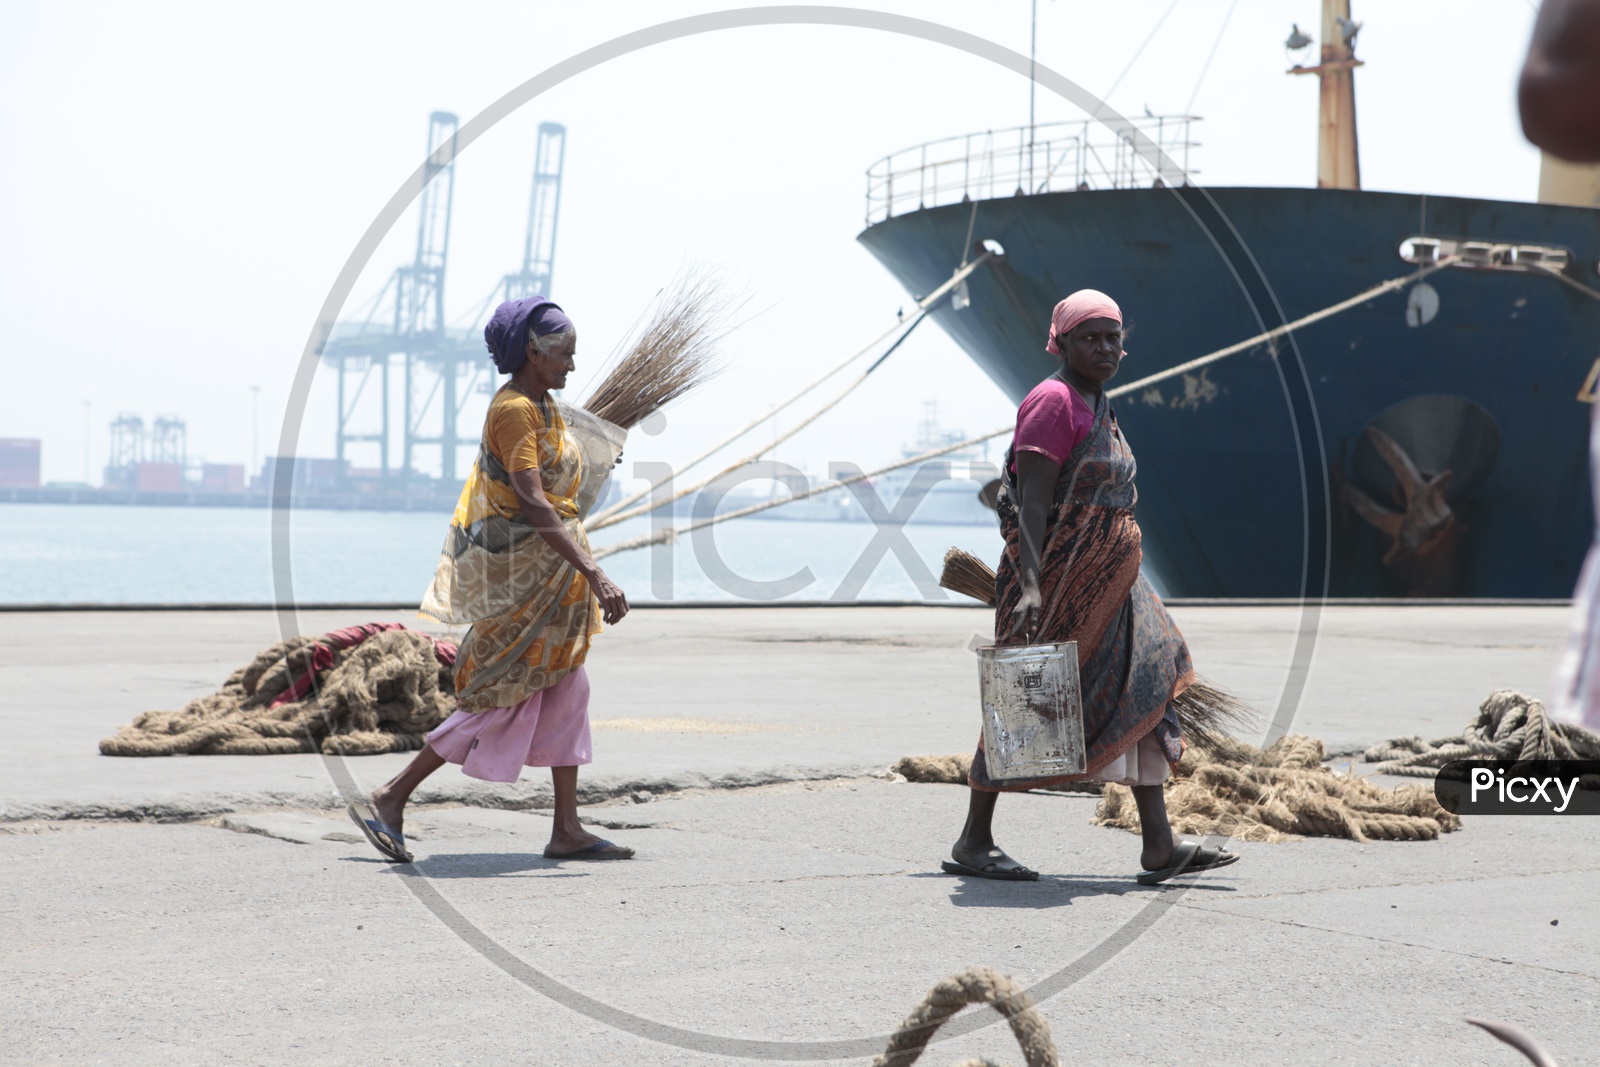 Women cleaners in a shipyard